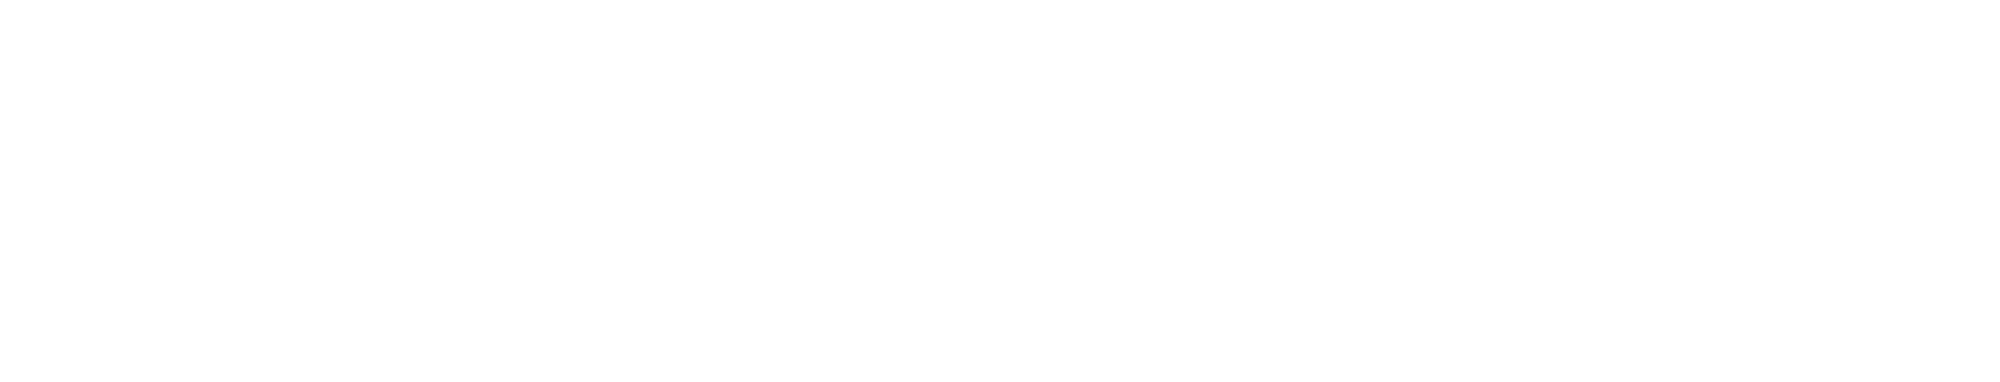 zero:zero brand logo image